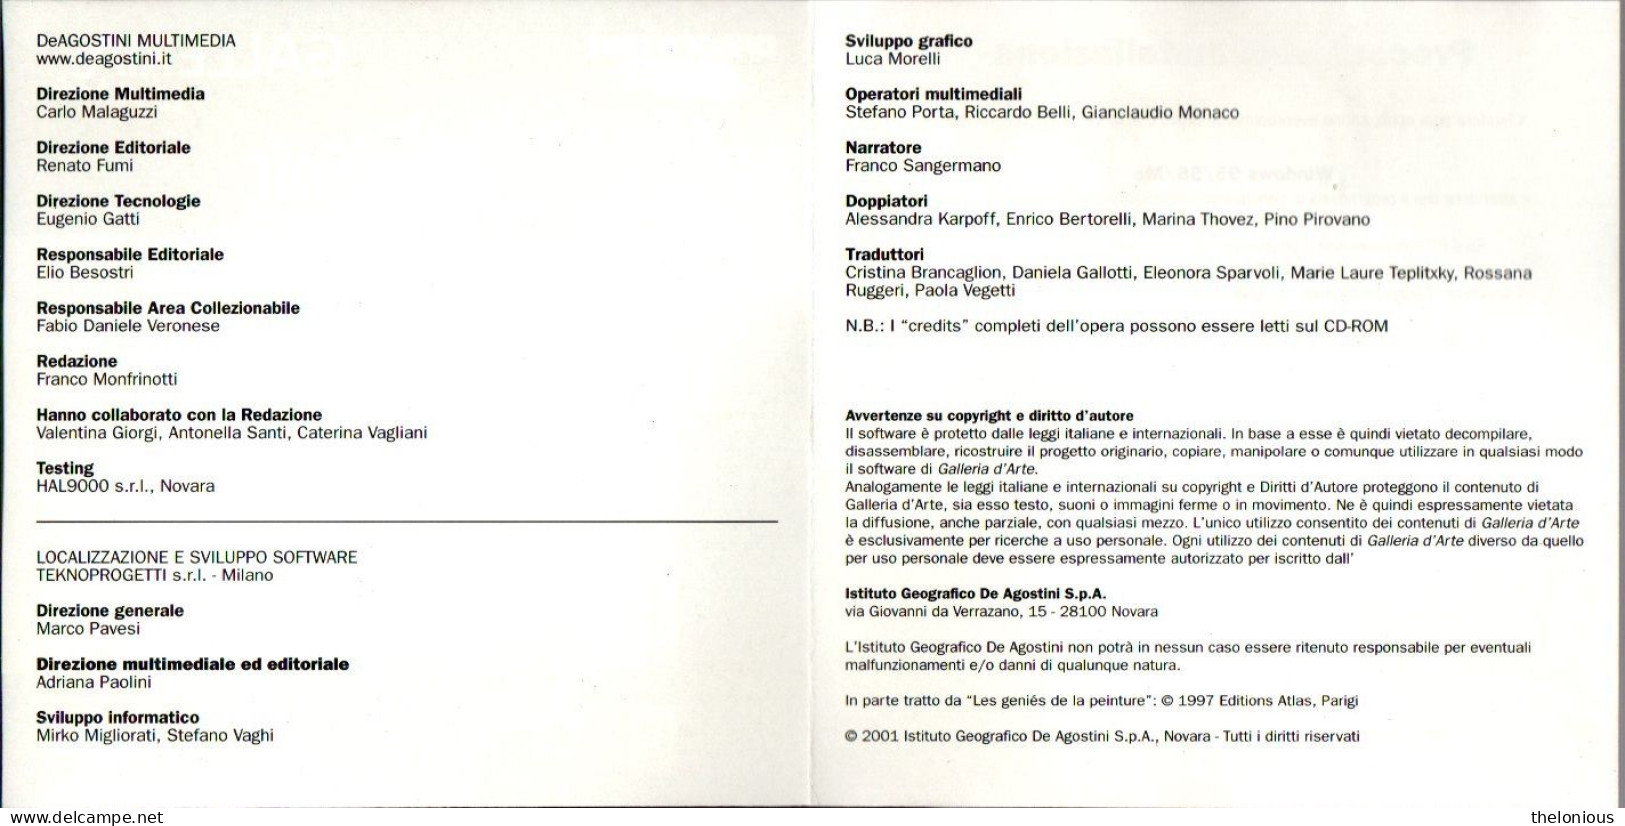 # CD ROM Galleria D'Arte - RENOIR - De Agostini Moltimedia 2001 - Altri